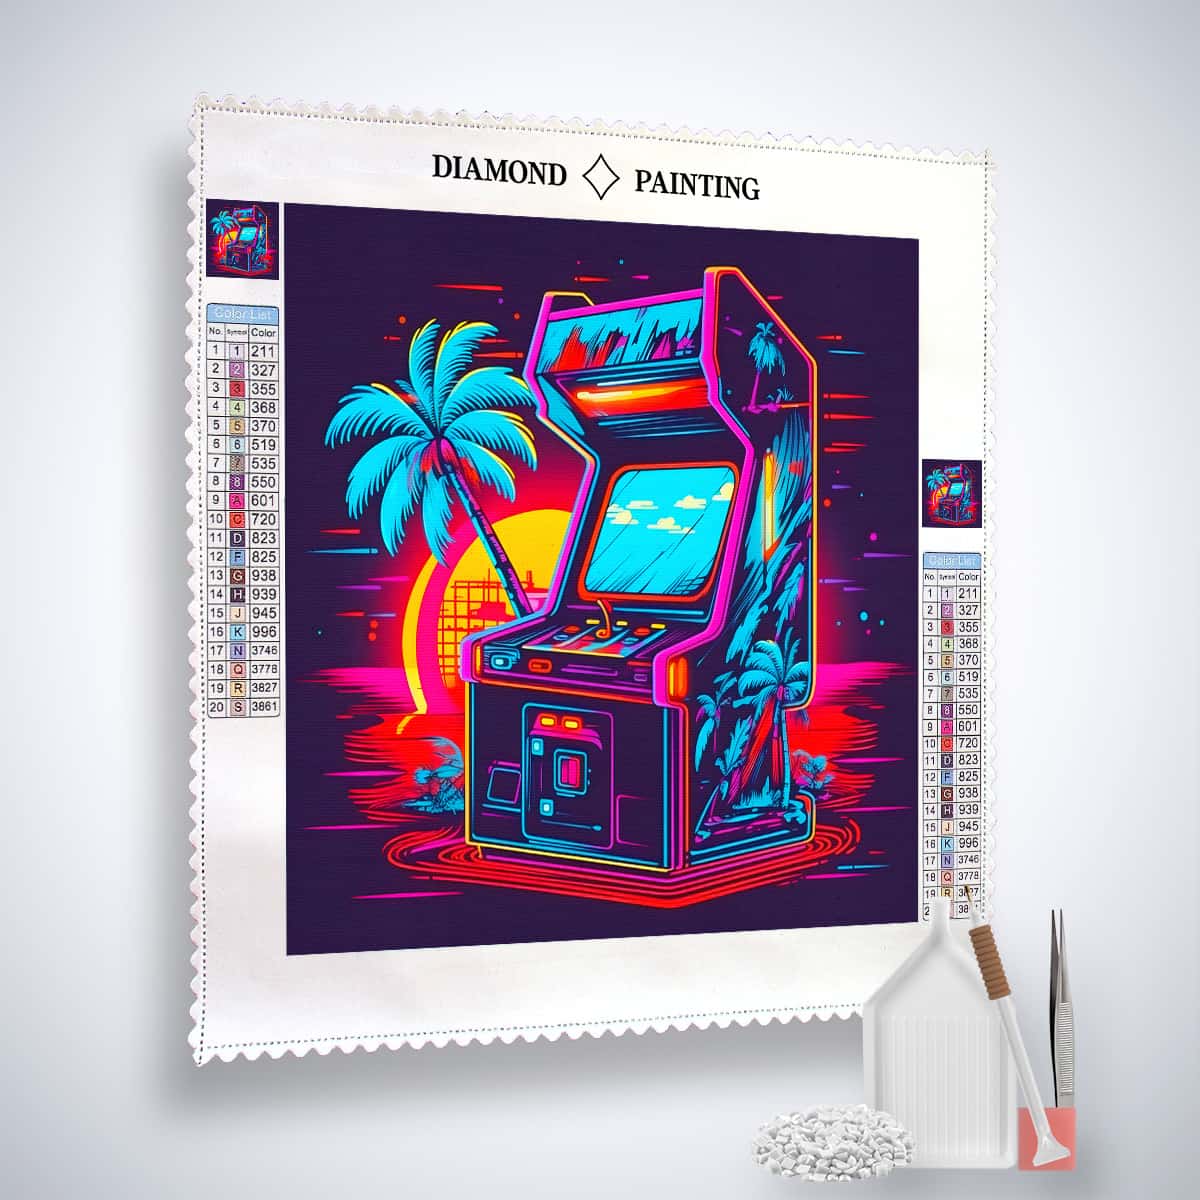 AB Diamond Painting - Spielautomat Neon - gedruckt in Ultra-HD - AB Diamond, Comic, Neu eingetroffen, Quadratisch, Retro